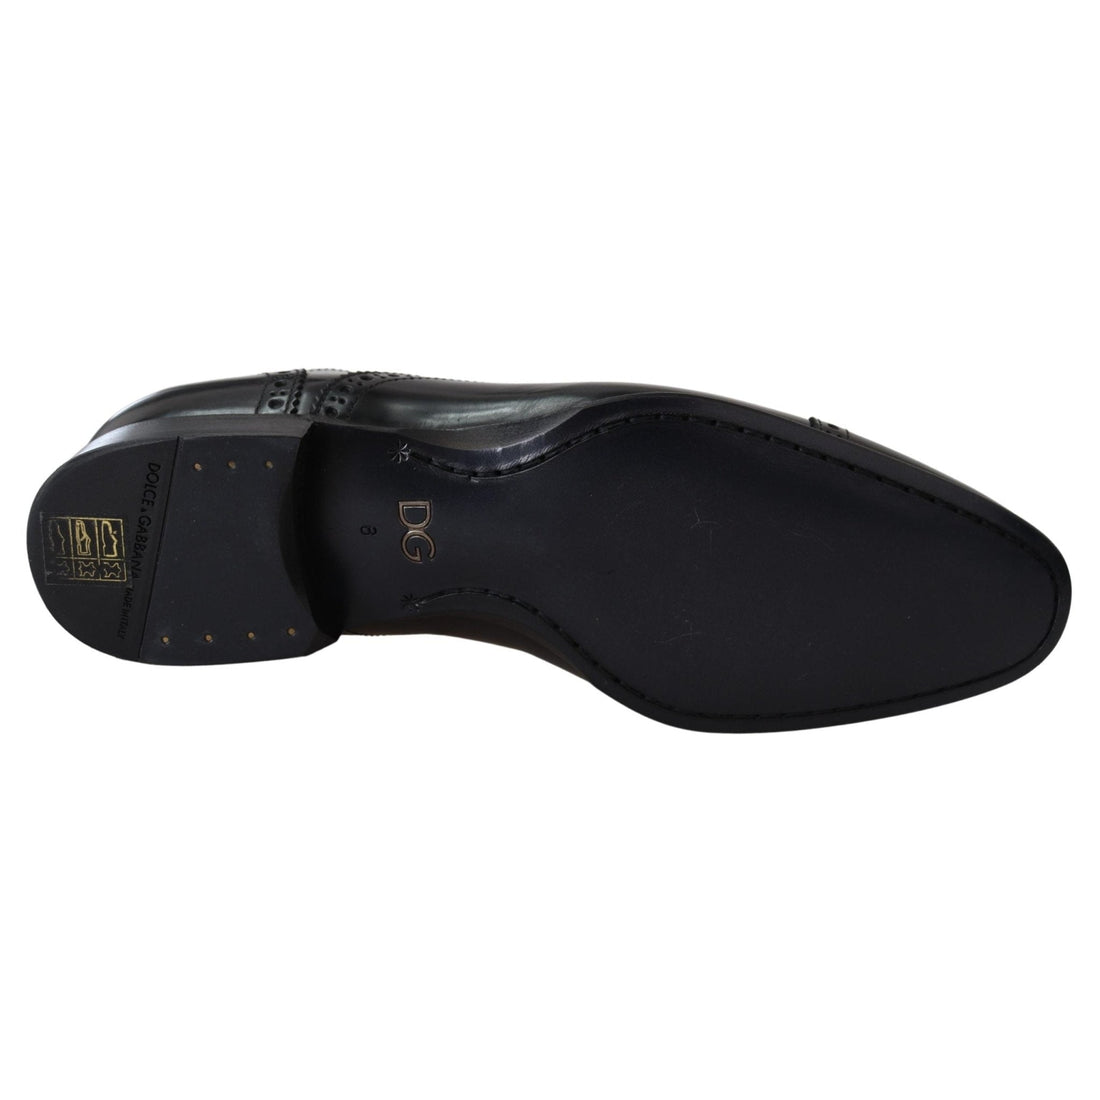 Dolce & Gabbana Black Leather Men Derby Formal Loafers Shoes - Paris Deluxe